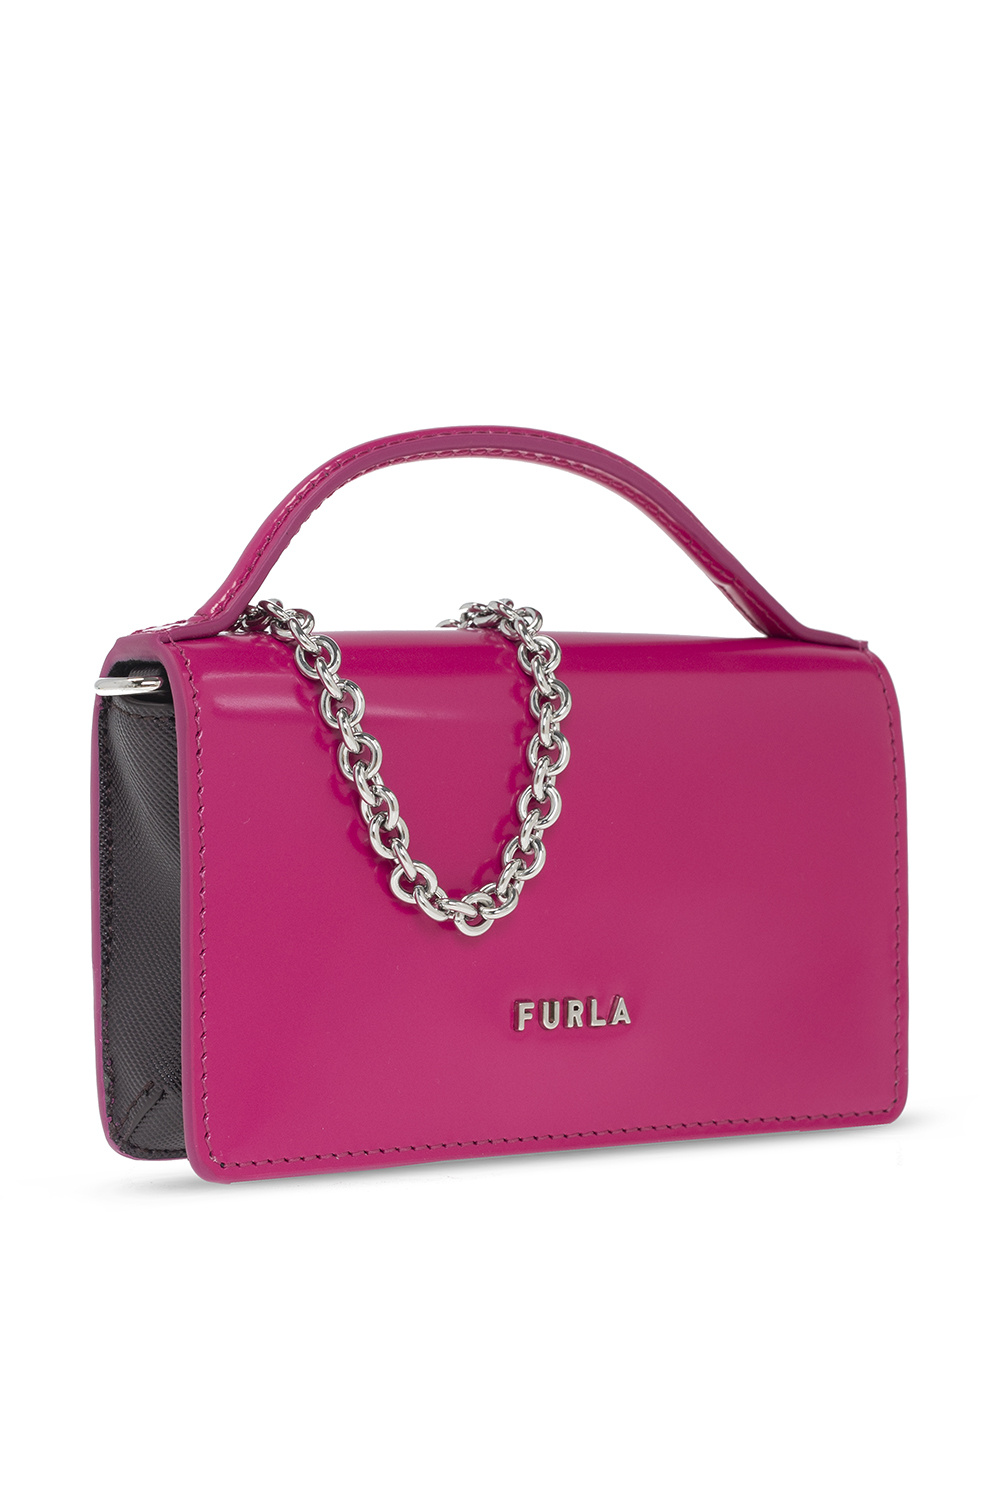 Furla 'Splendida Mini' shoulder bag, Women's Bags